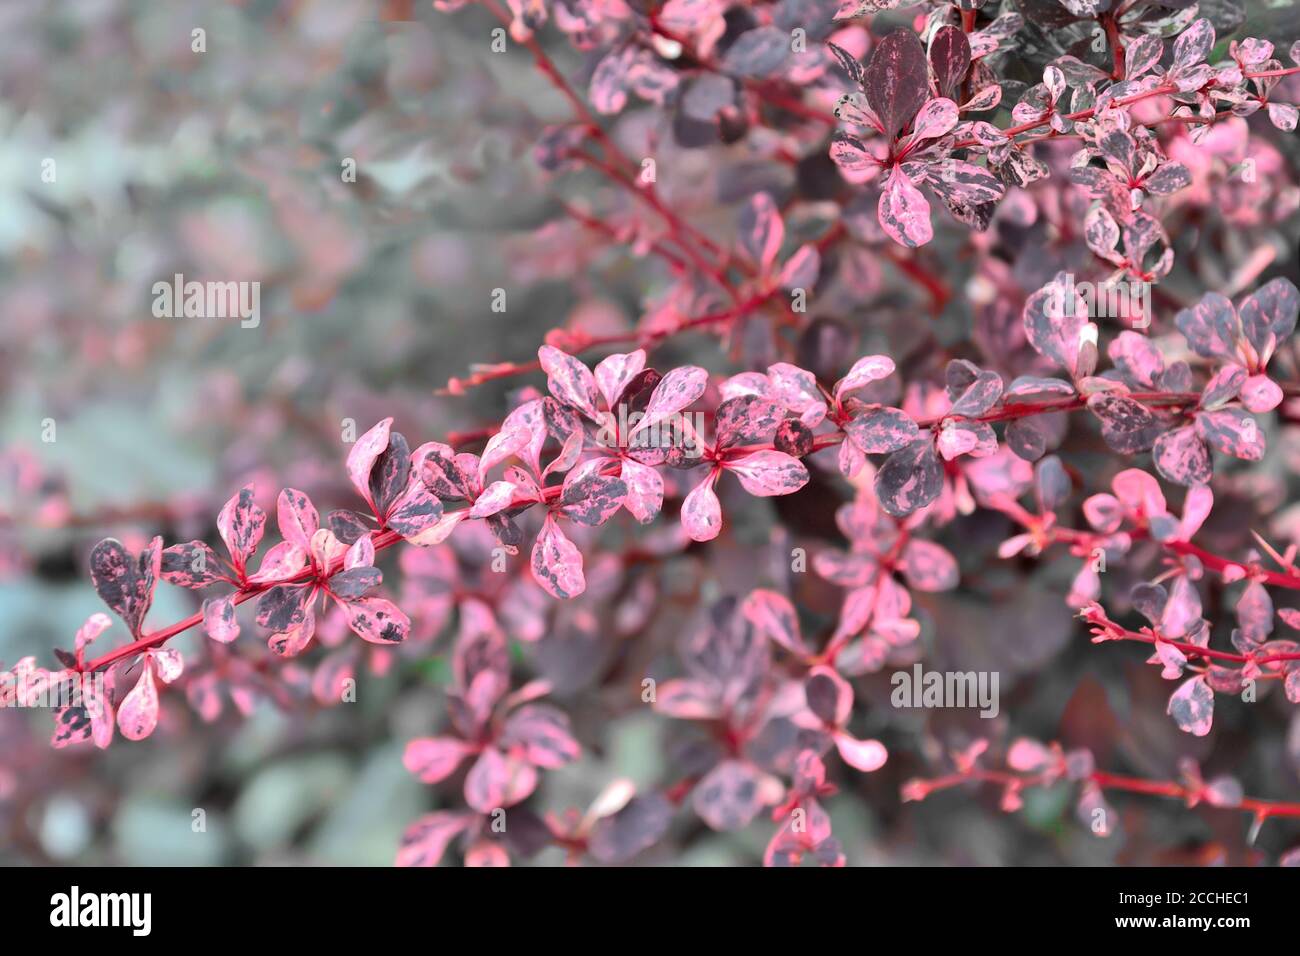 Gefärbte rosa violette Blätter der Sorte Thunbergs Berberberry (Berberis thunbergii 'Harlequin'). Unscharfer Hintergrund, selektiver Fokus. Gartenarbeit oder lan Stockfoto